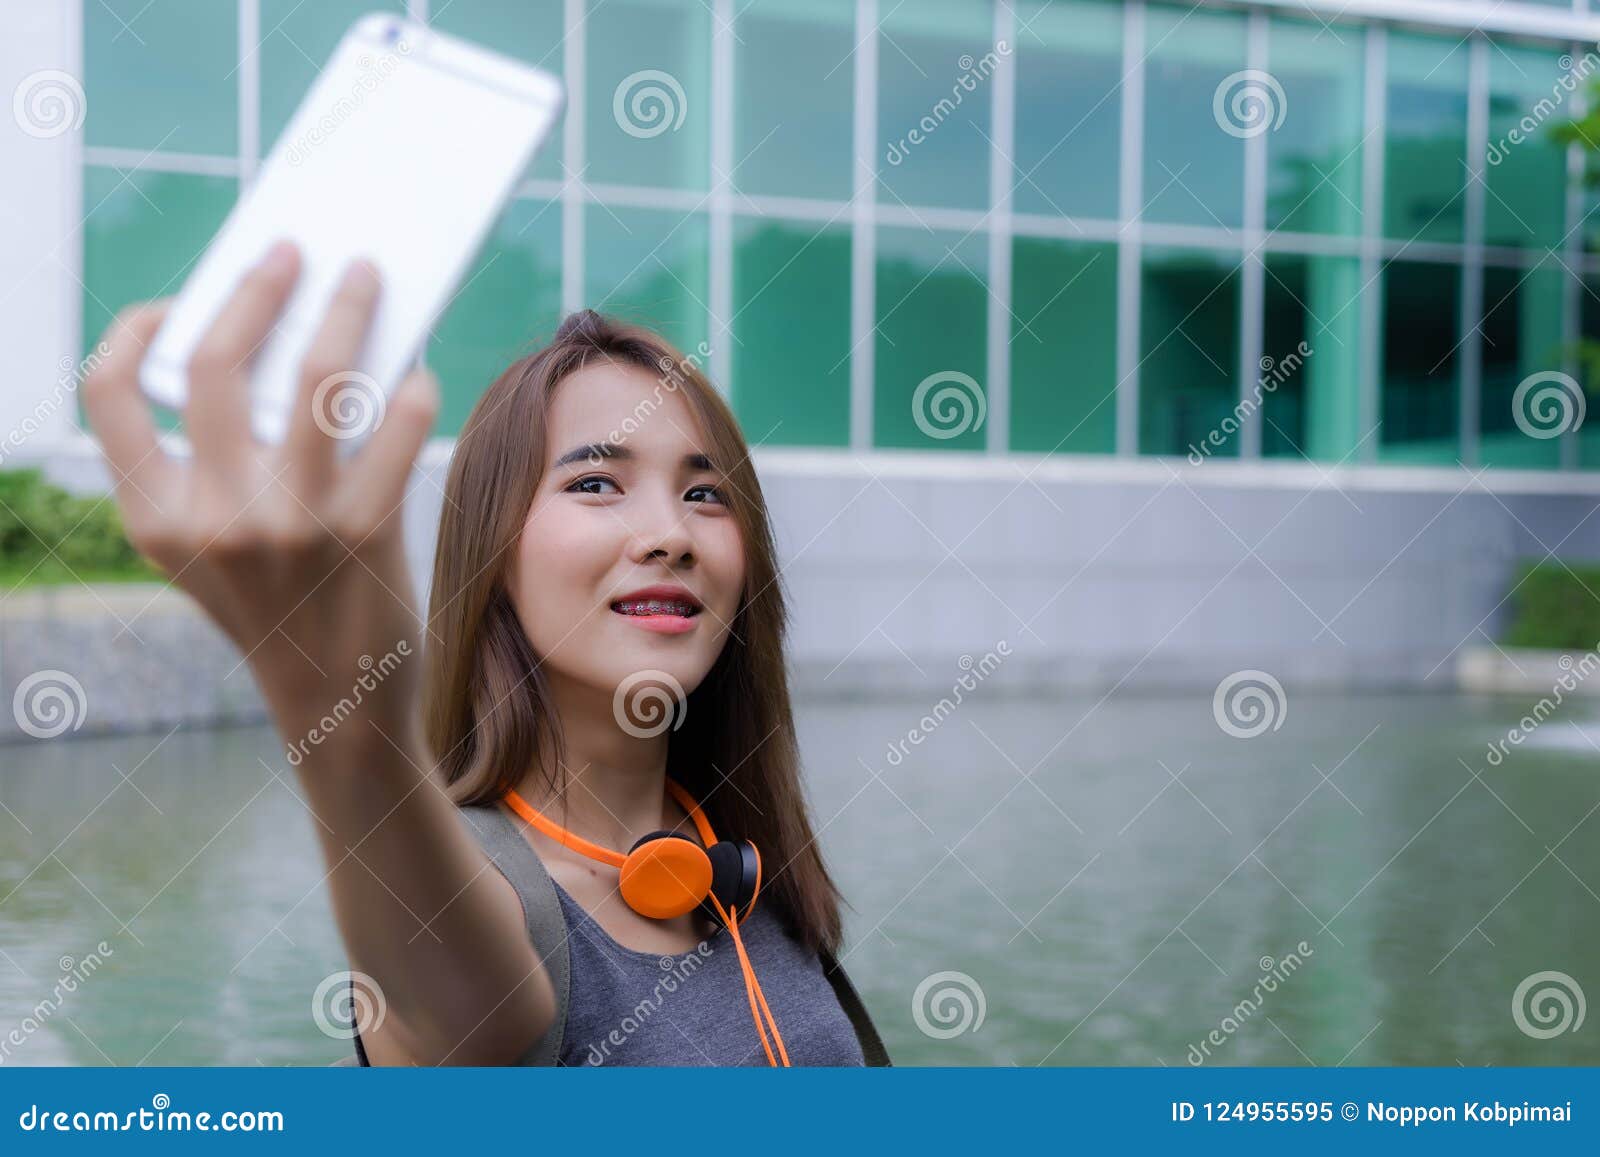 perfect asian girl selfie nude gallerie